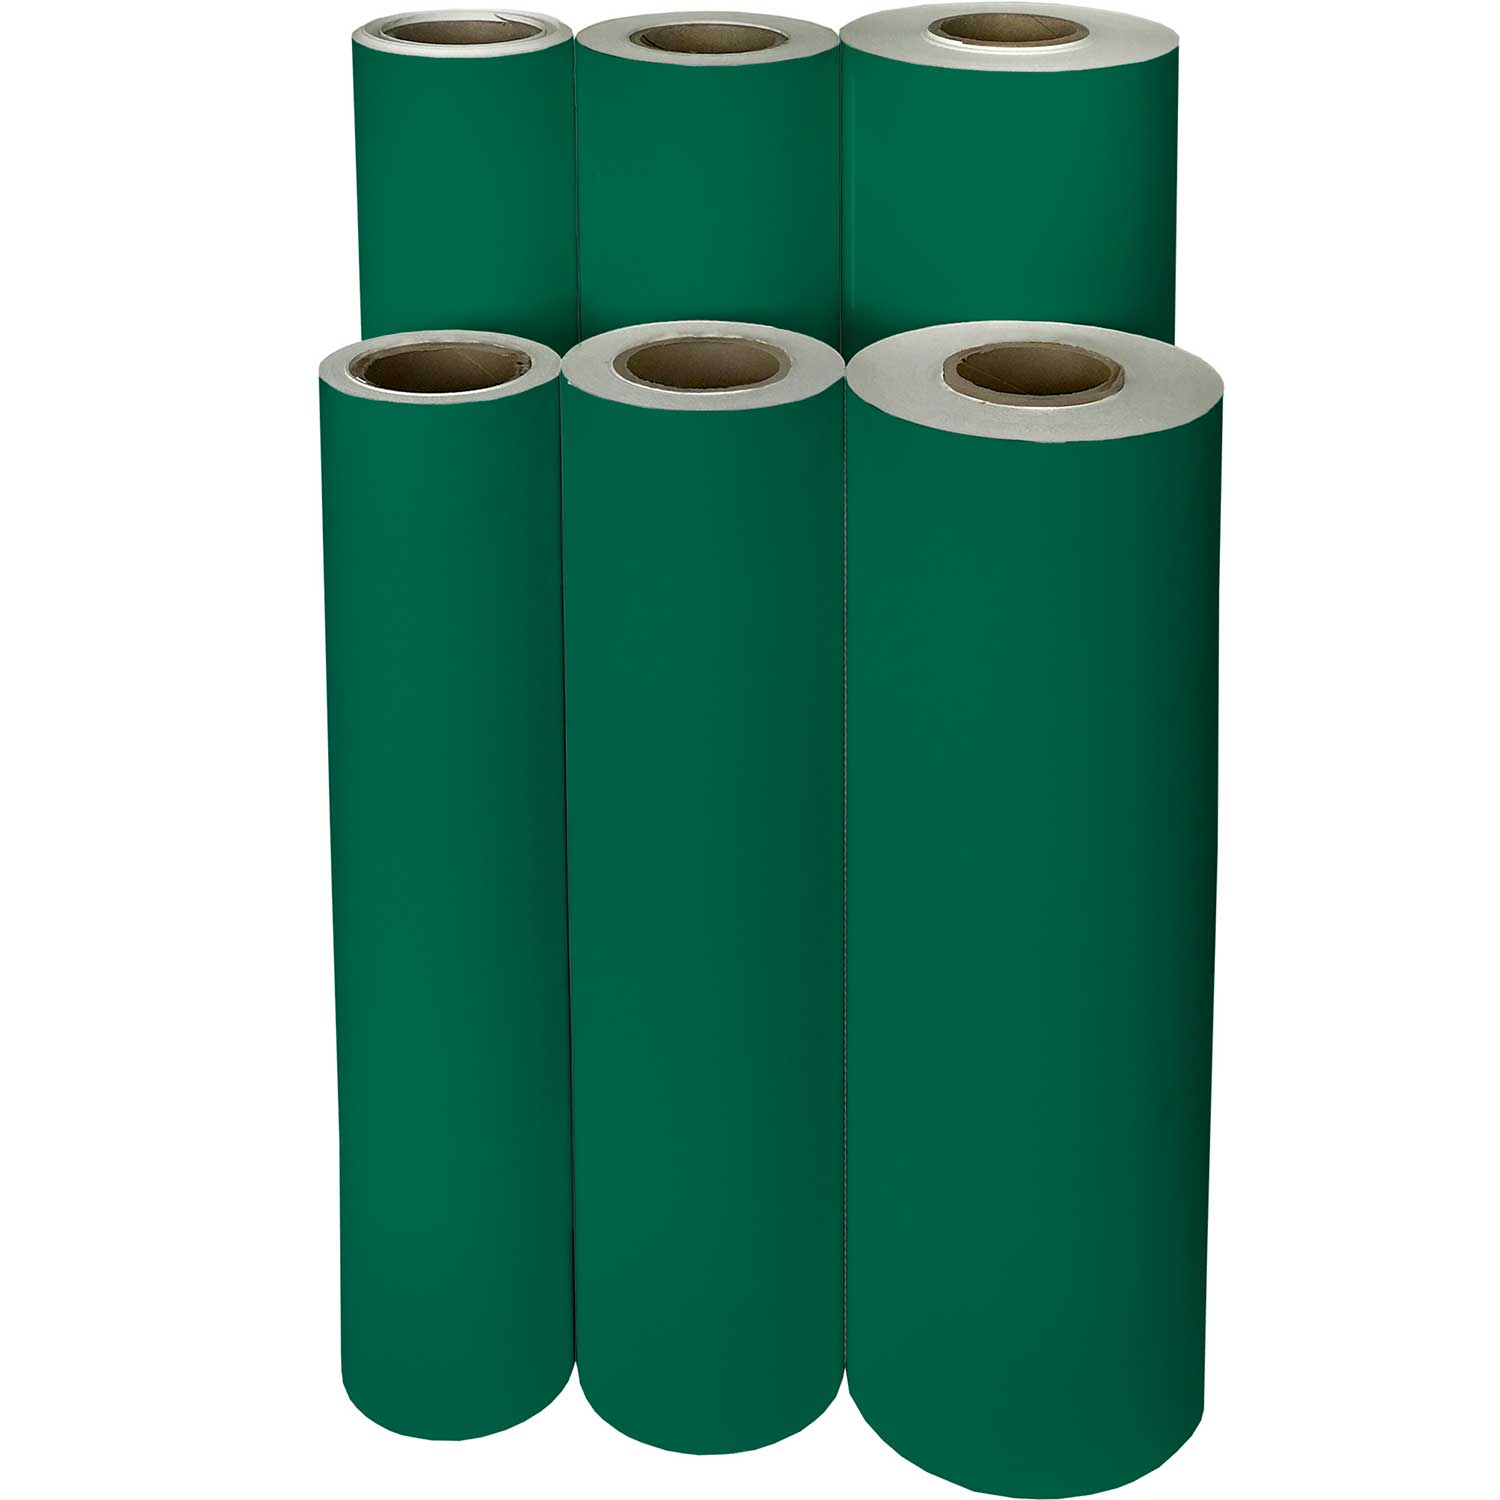 Emerald Green Tissue Paper,Tissue Paper,Gift Grade Tissue Paper Sheet - 20  x 30,Green Tissue Paper,Gift Wrap,Christmas,Birthdays,Graduation